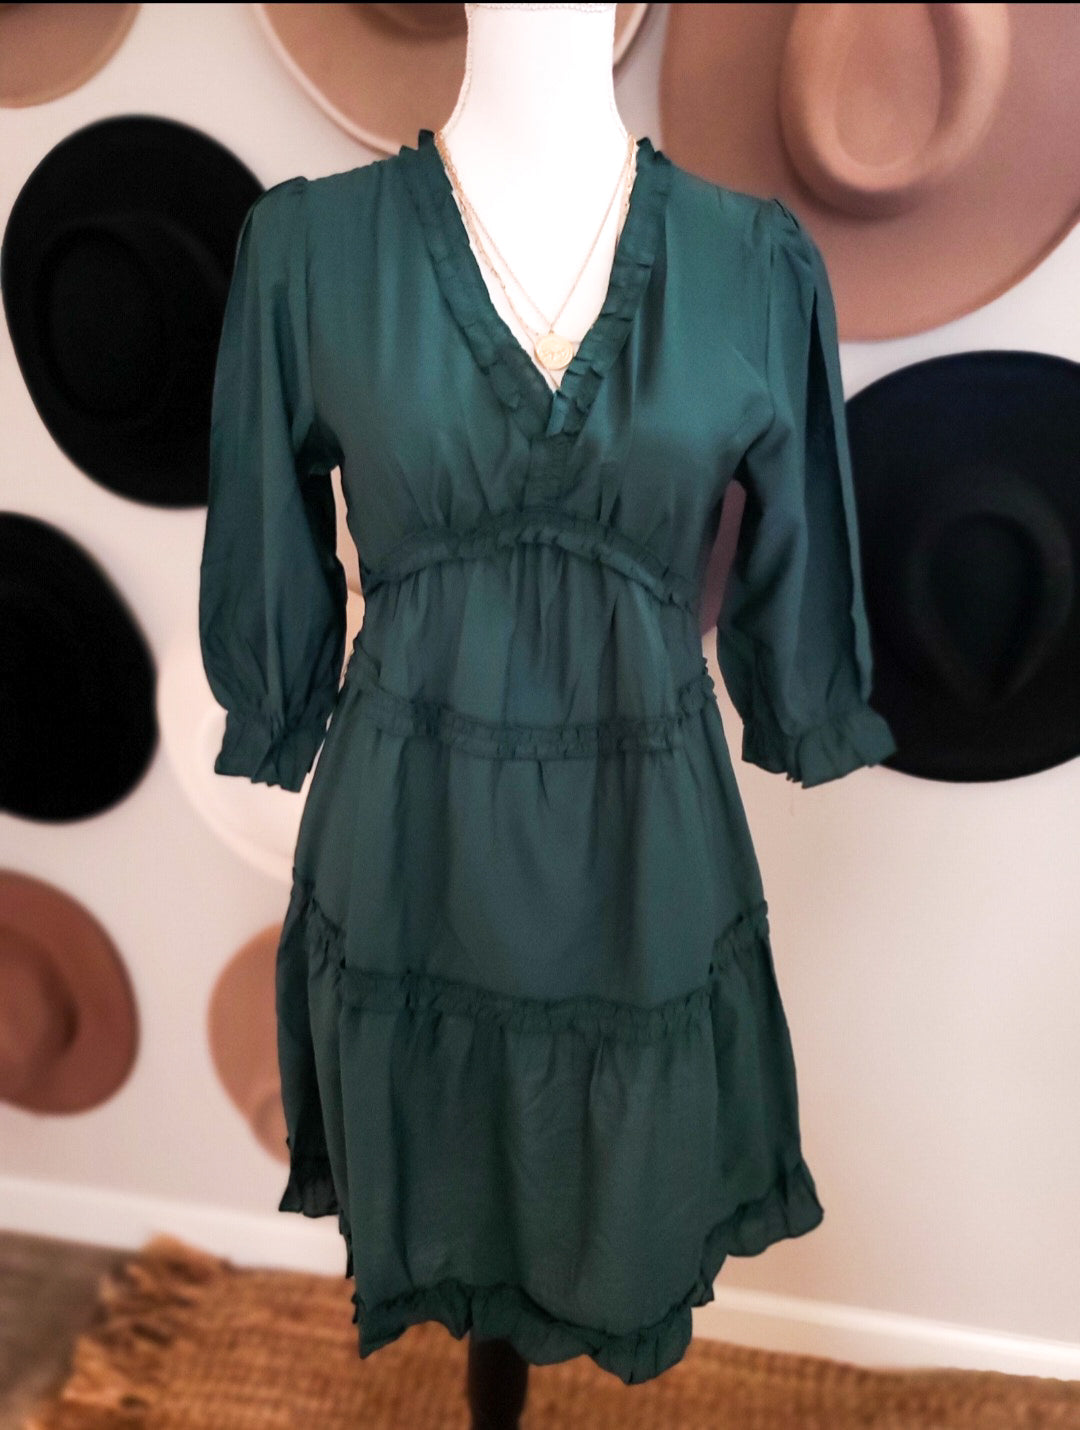 Ruffled Green Dress S-XL